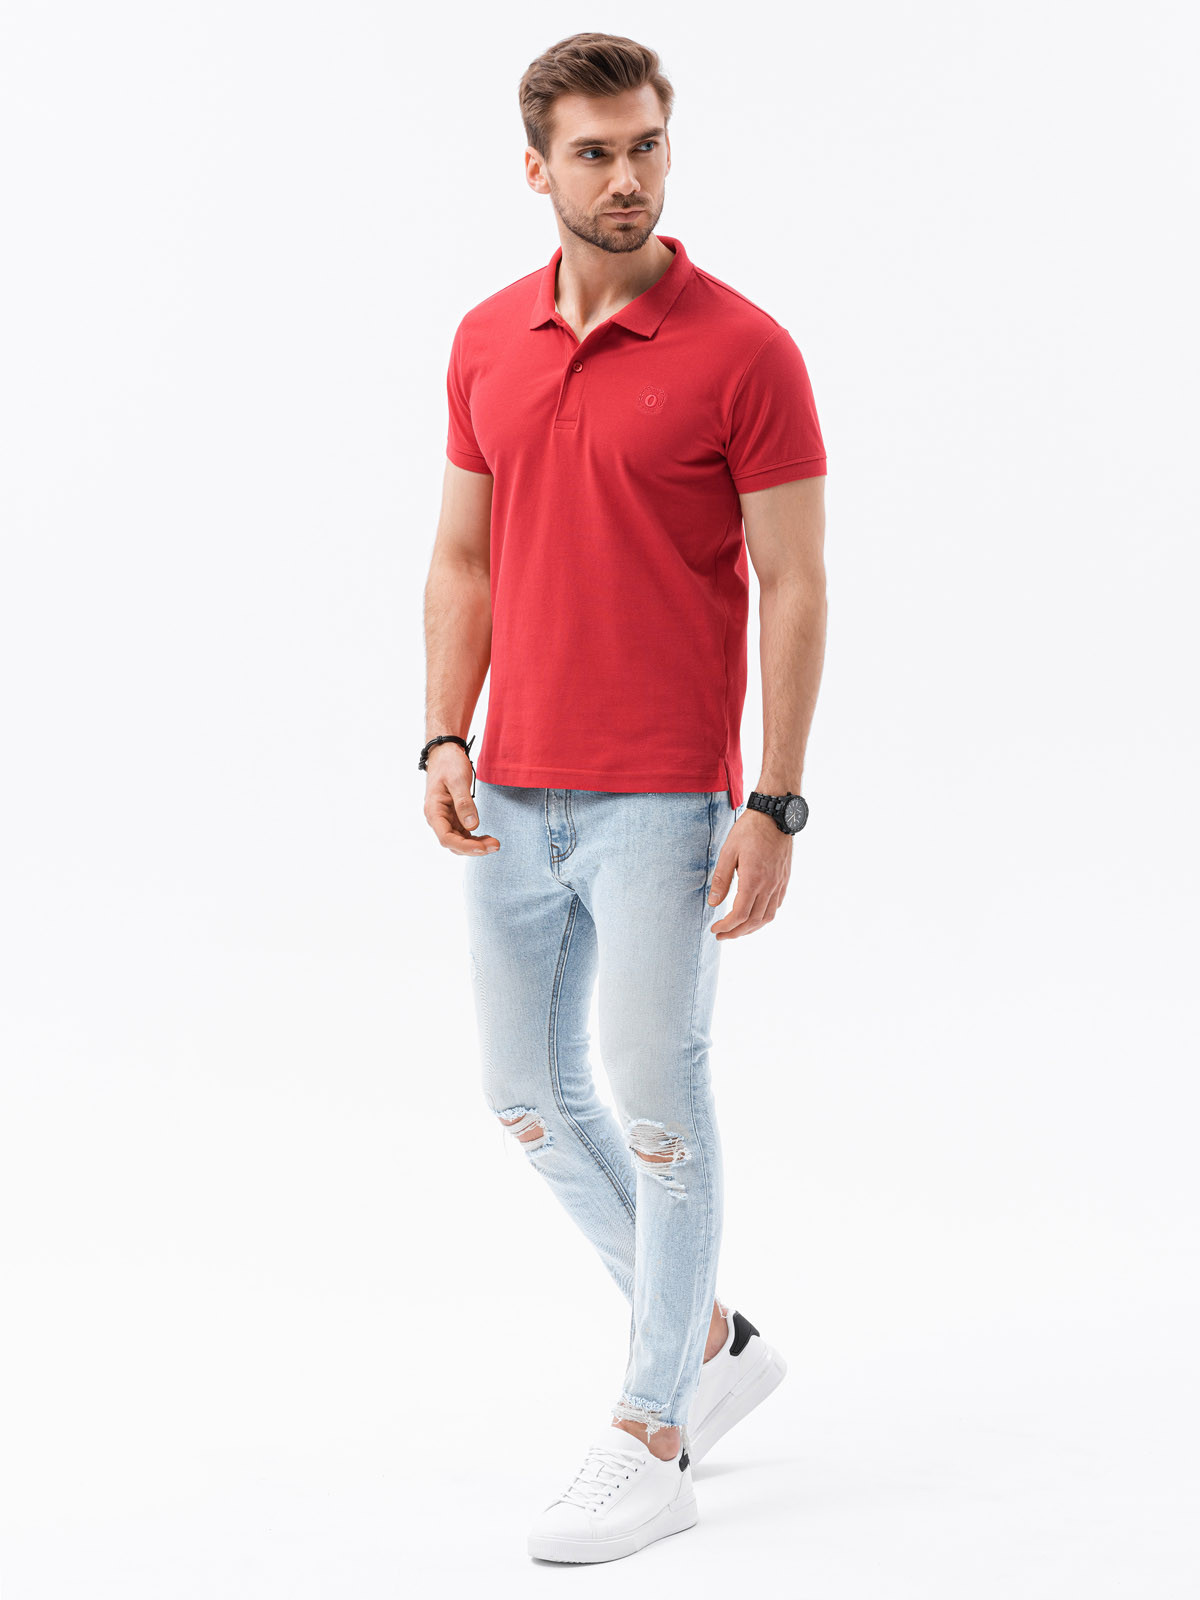 Ombre Polo trička S1374 Červená L